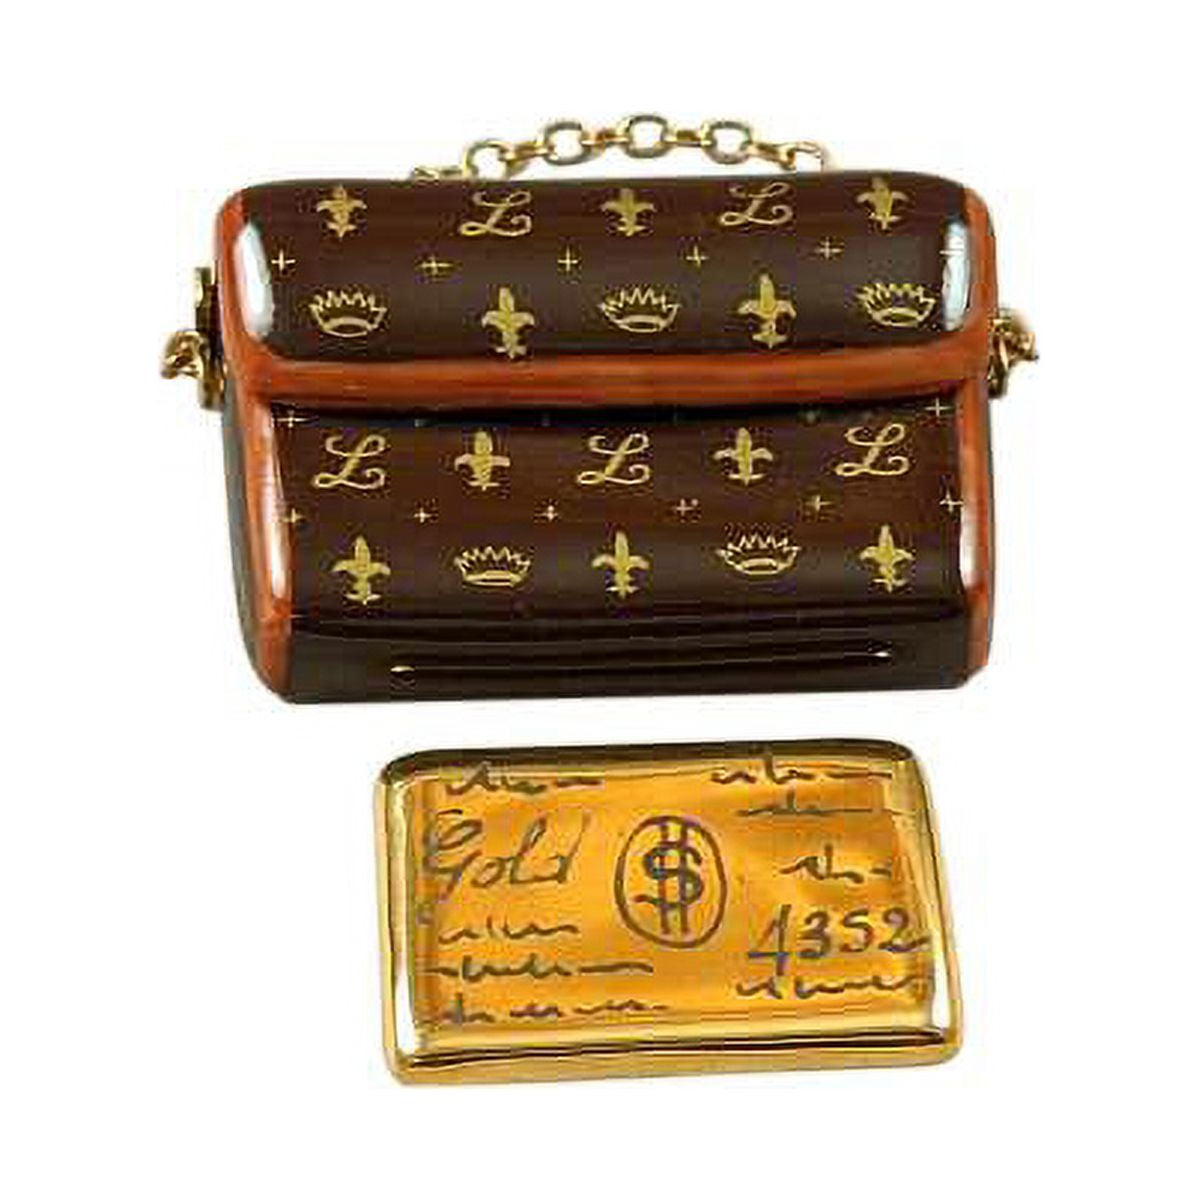 Designer Handbag Limoges Box (Rochard)